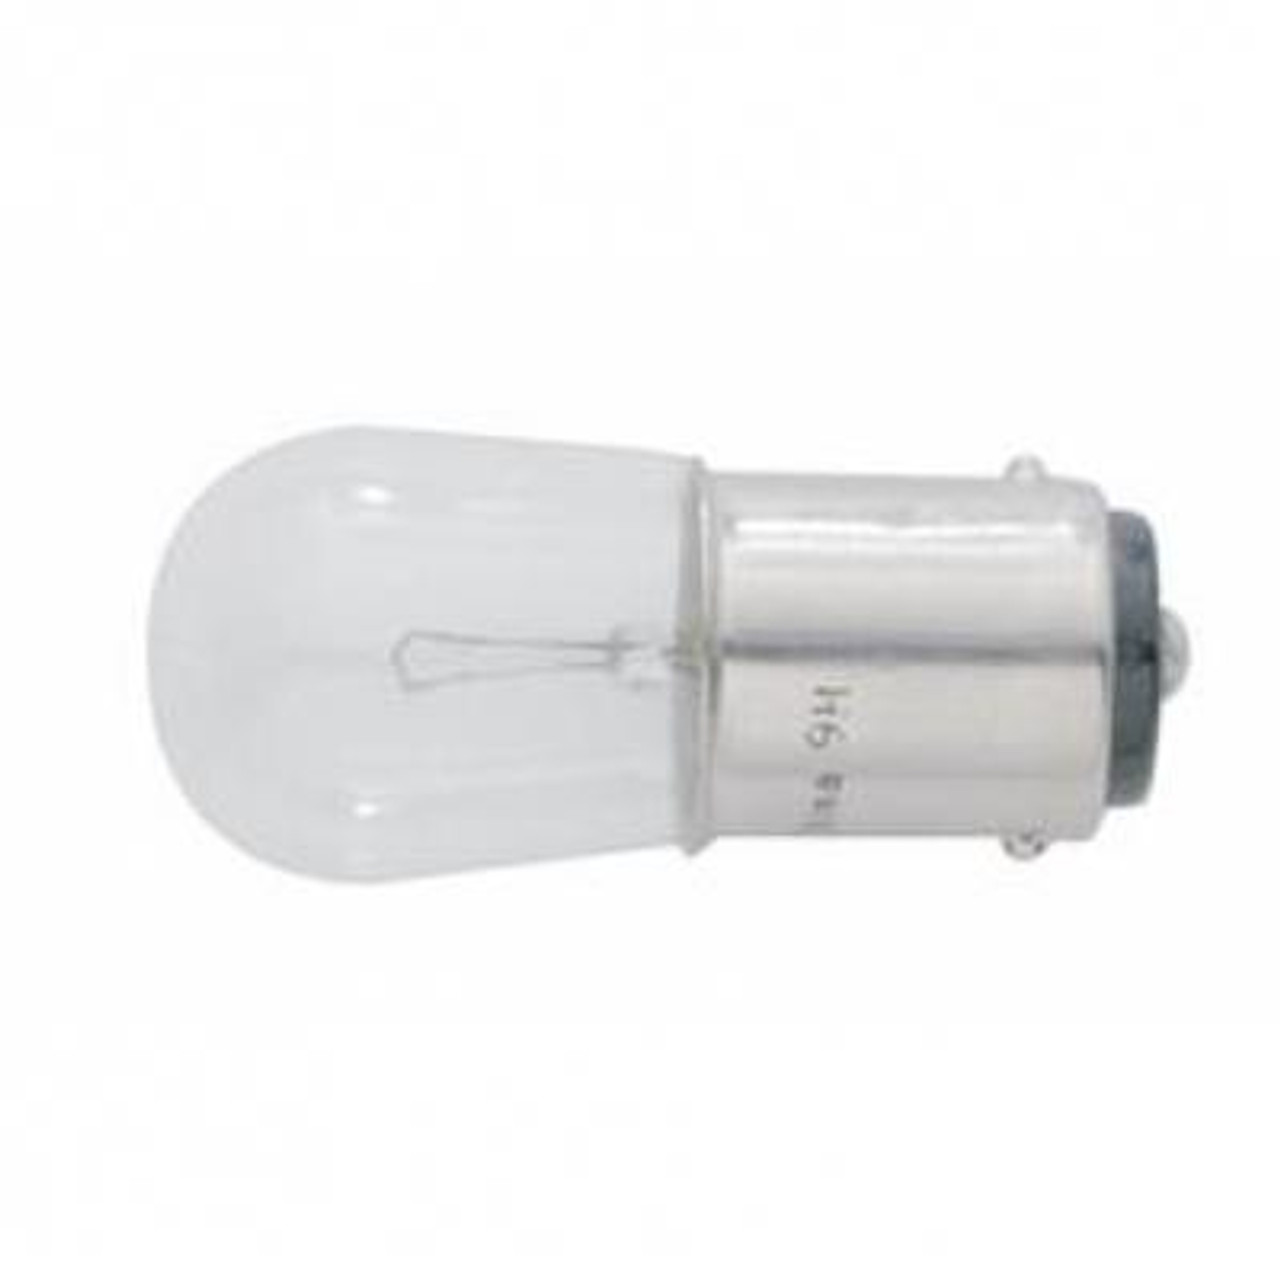 #1004 Dome Light Bulb